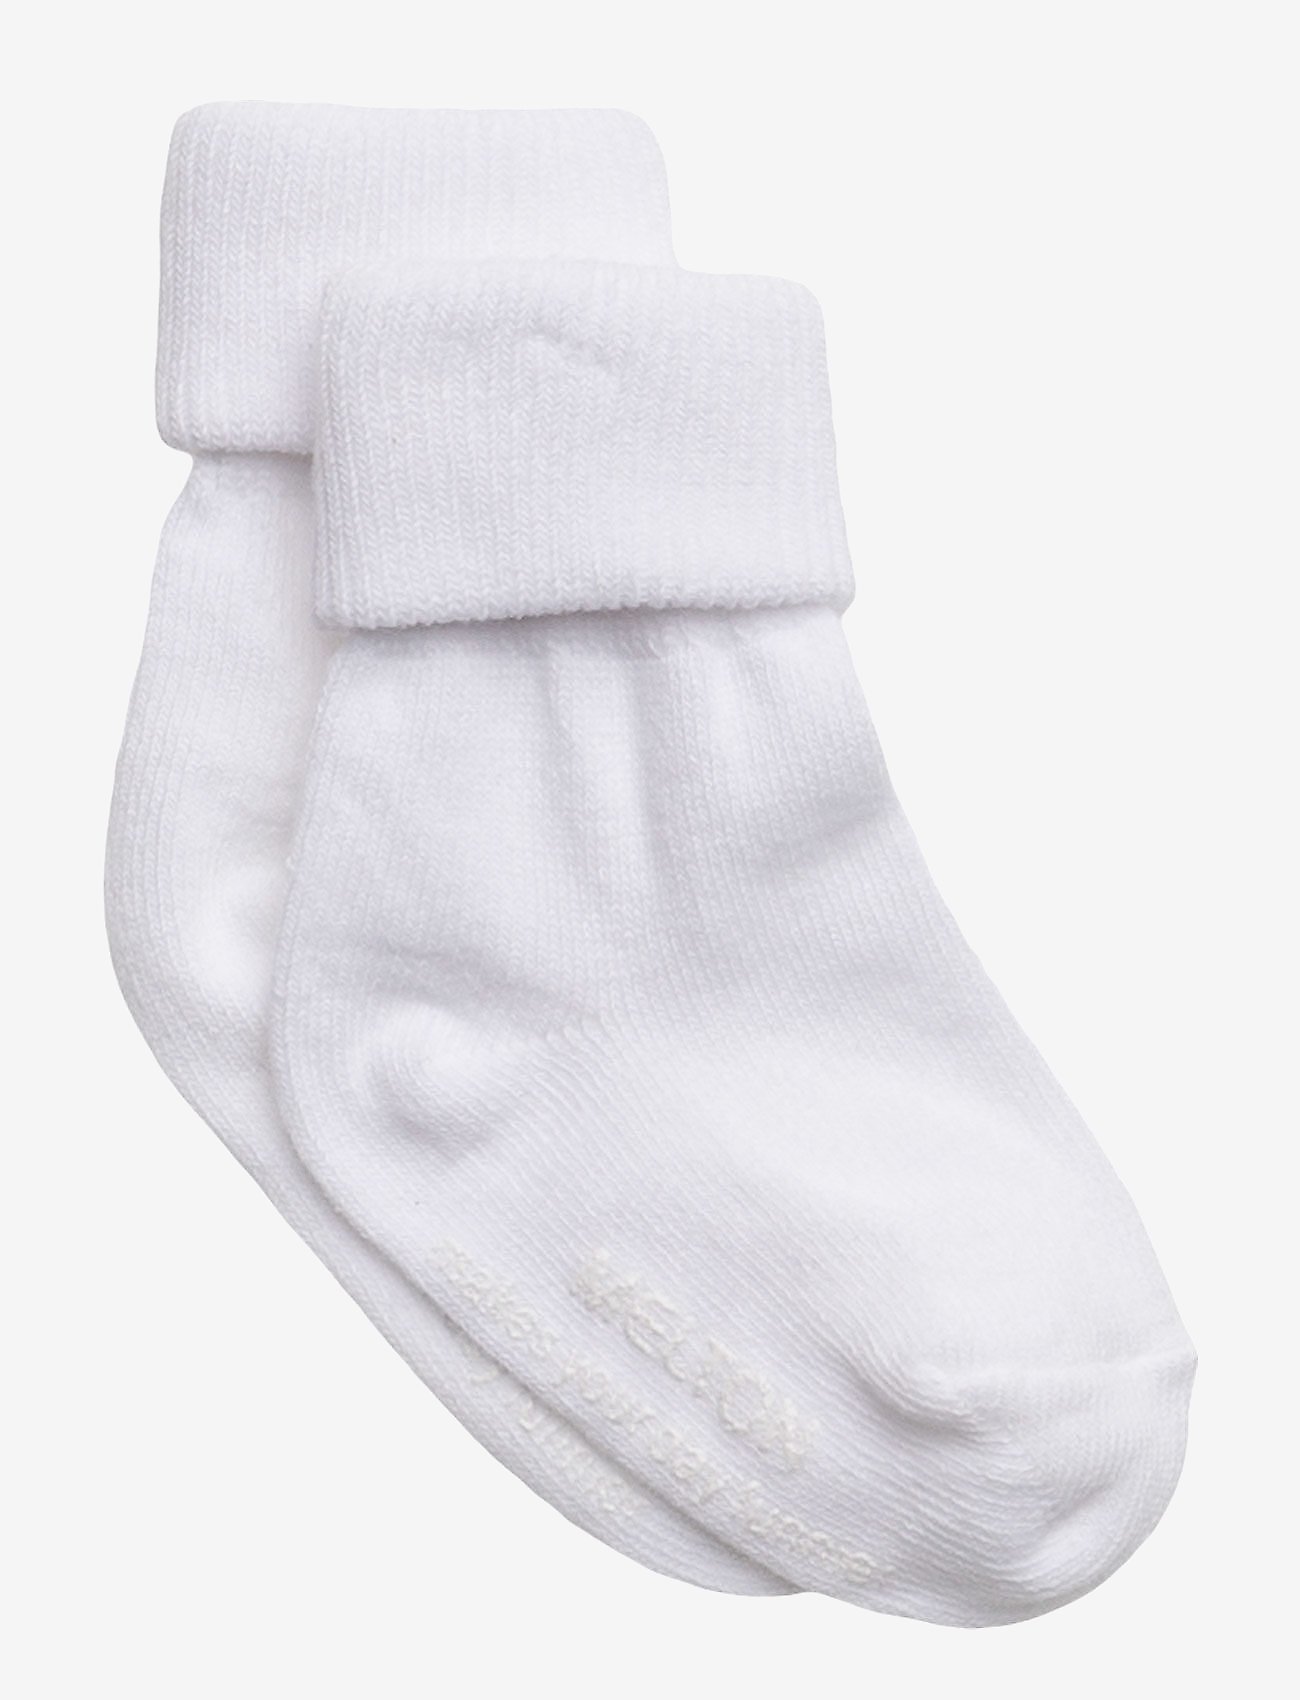 Melton - Cotton socks - anti-slip - socks - 100/white - 0